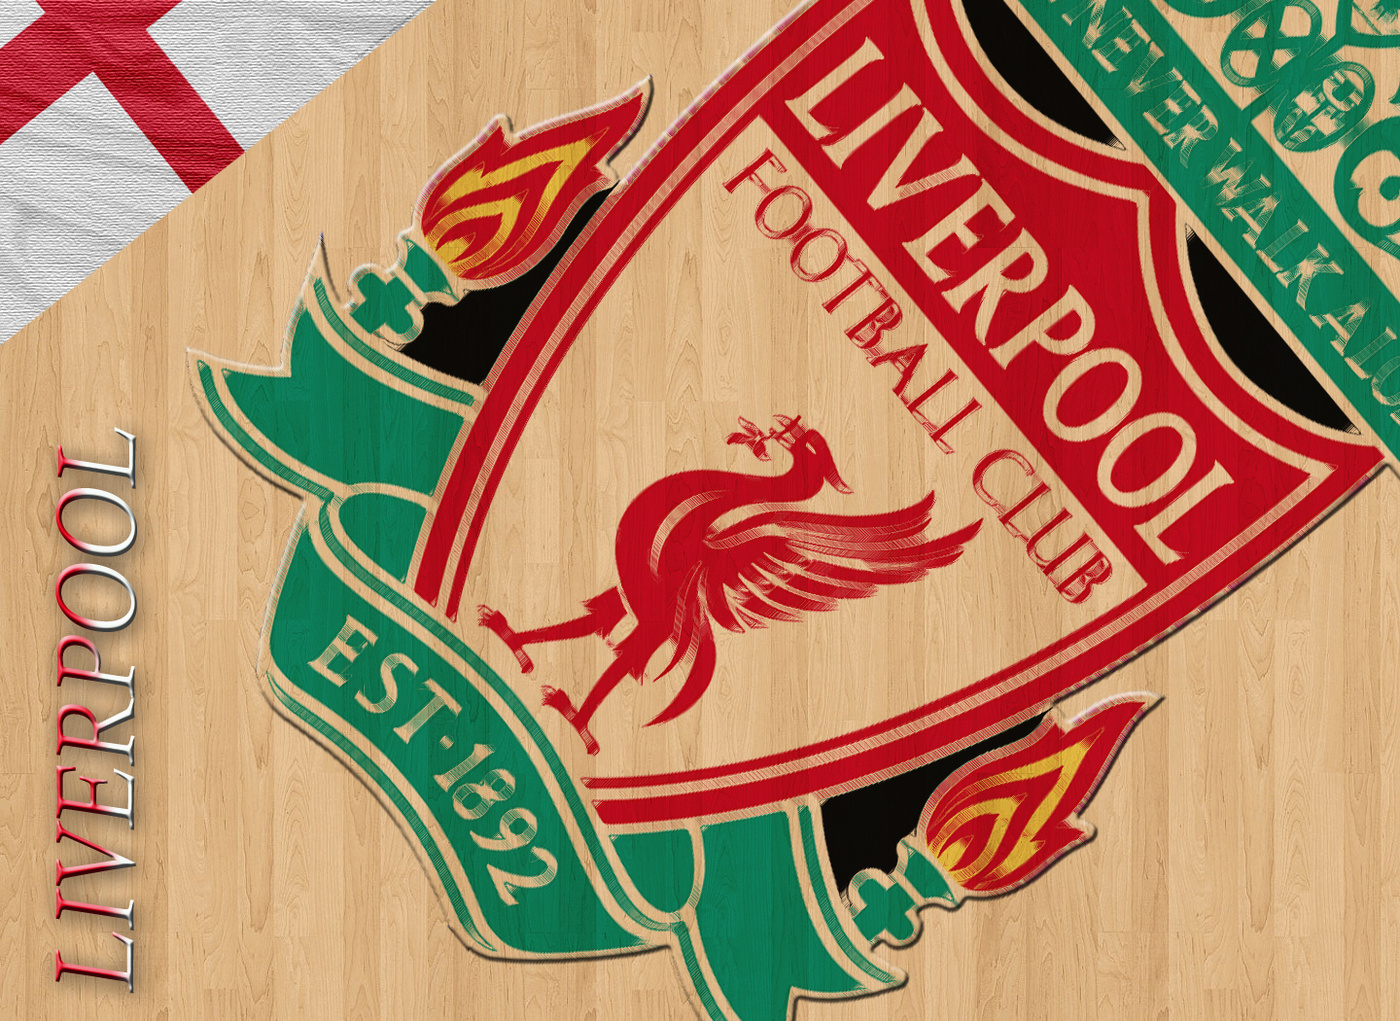 wallpapers hd for mac: Liverpool FC Logo Wallpaper HD 2013